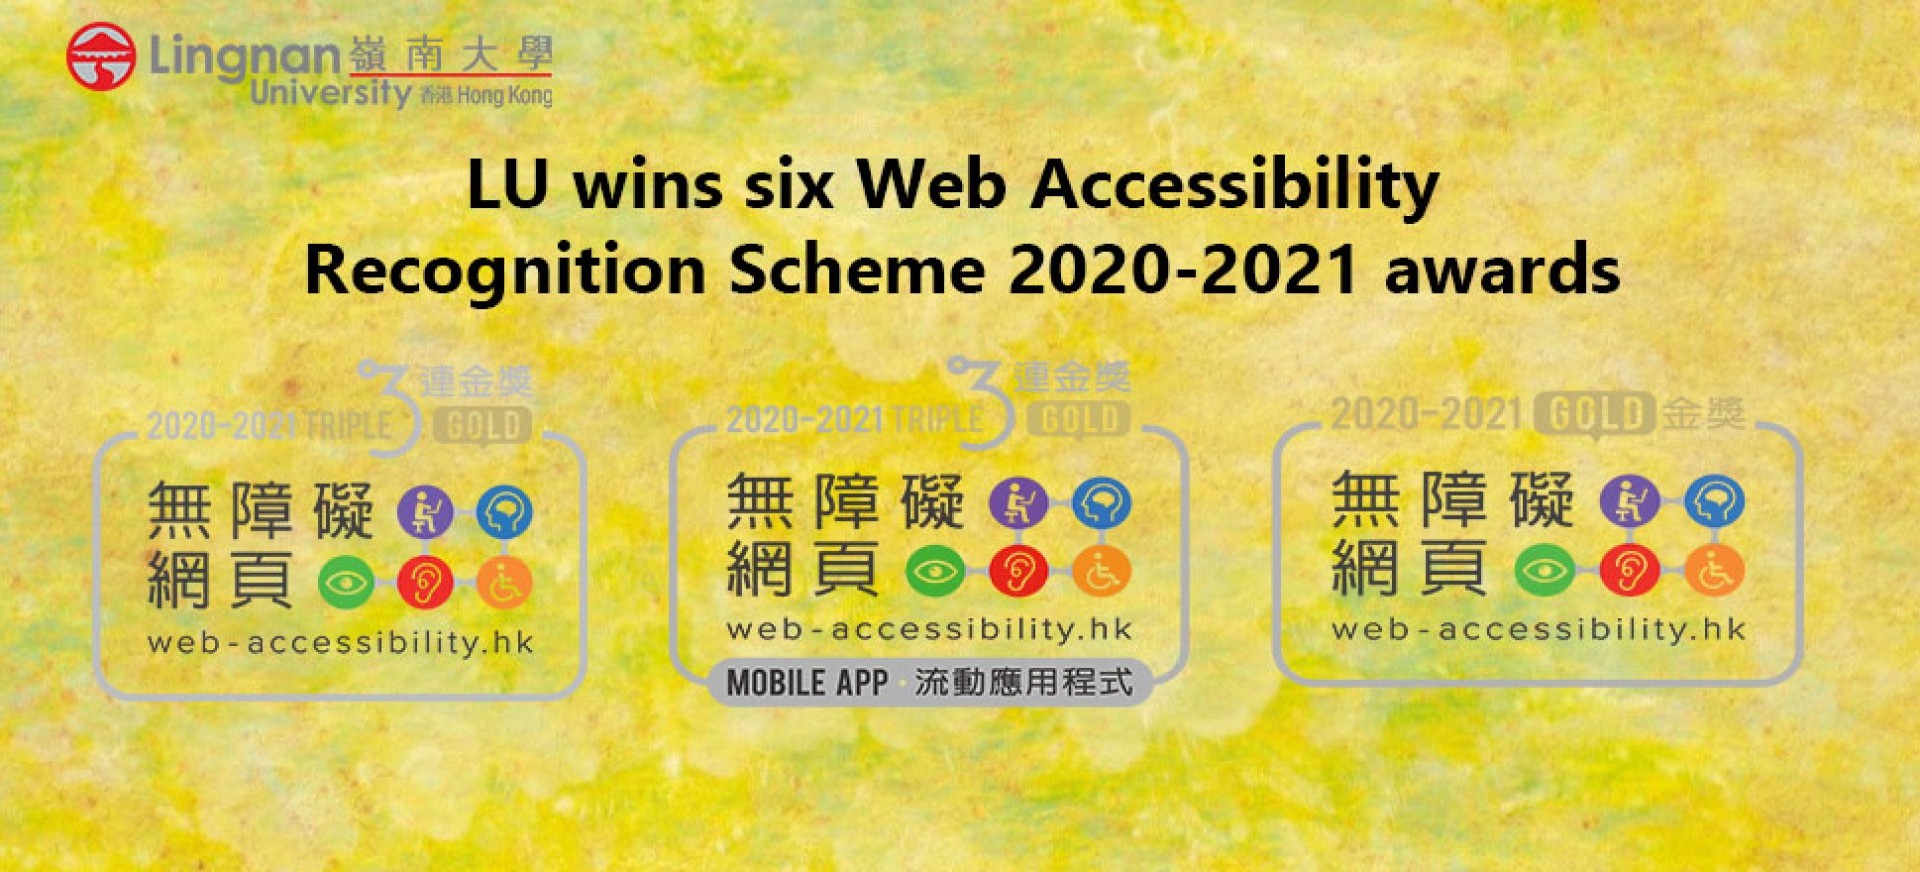 Web Accessibility Recognition Scheme 2020-2021 awards